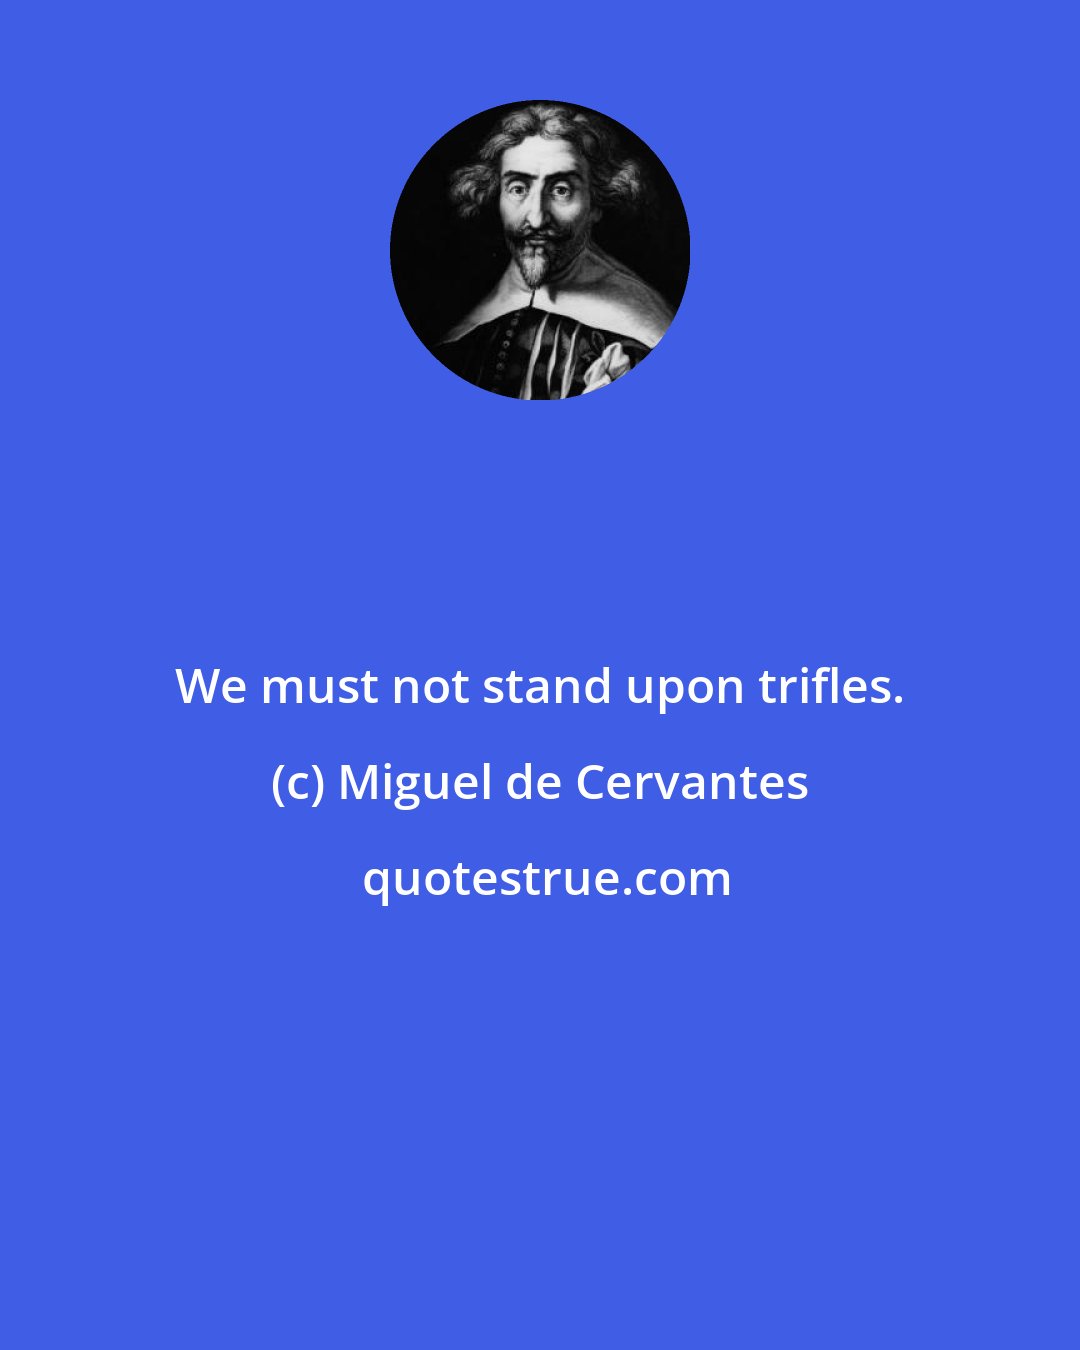 Miguel de Cervantes: We must not stand upon trifles.